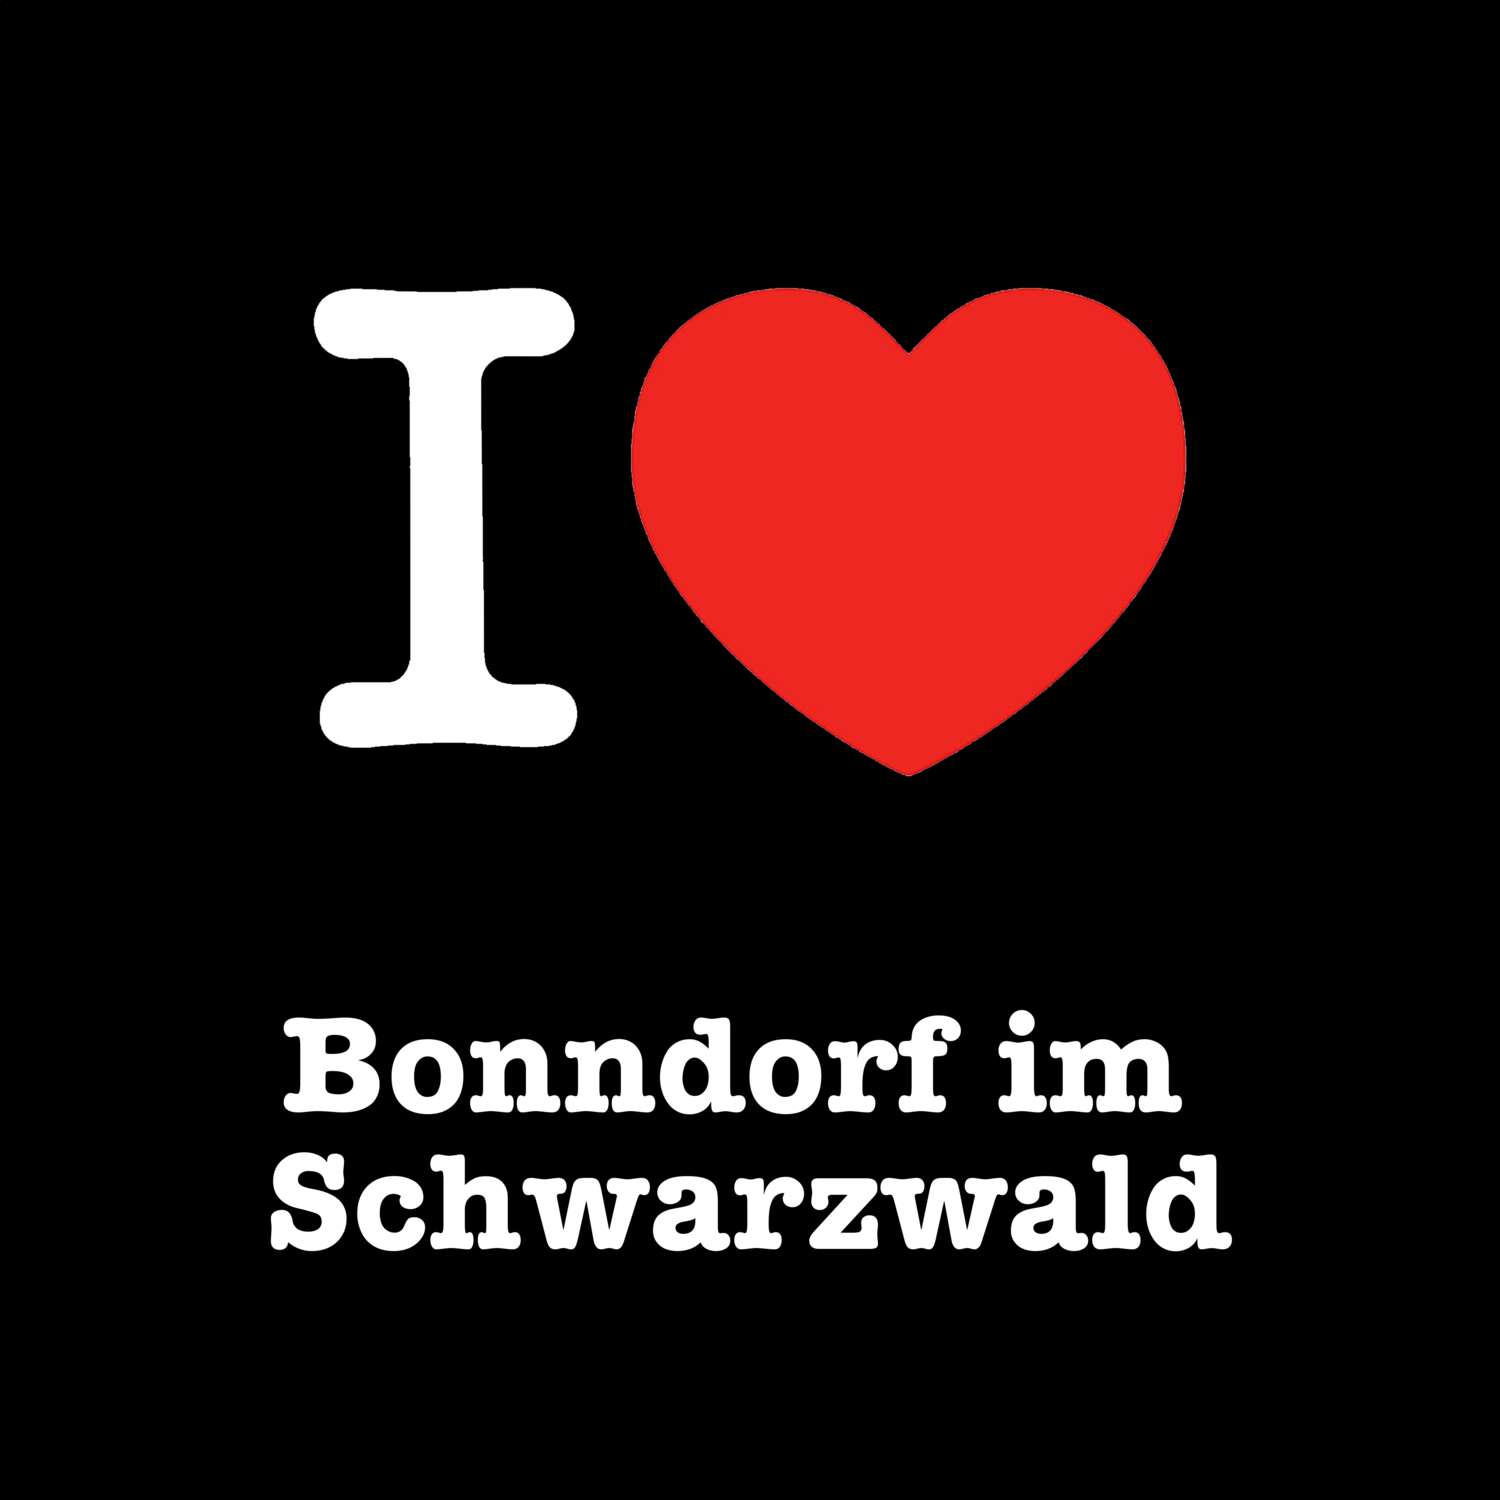 Bonndorf im Schwarzwald T-Shirt »I love«